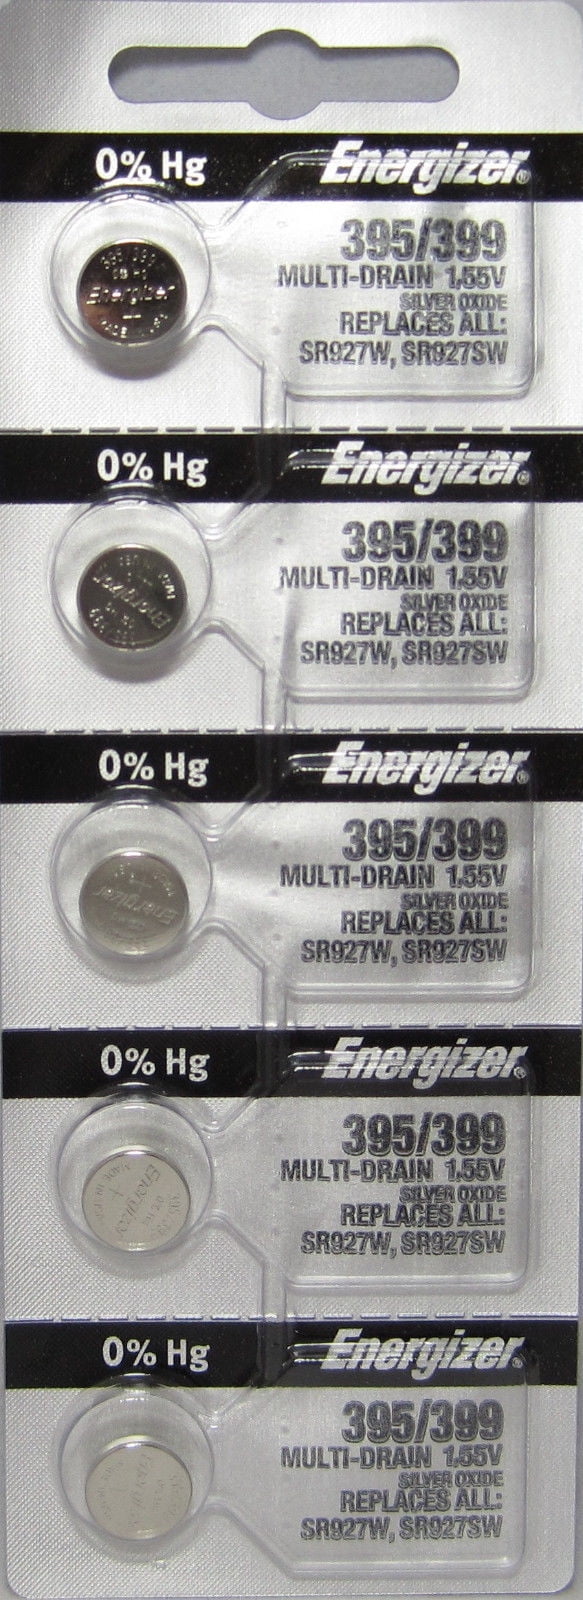 2 Energizer #395/399 SR927W SR927SW 0% Mercury Free 1.5V Silver Oxide Battery 